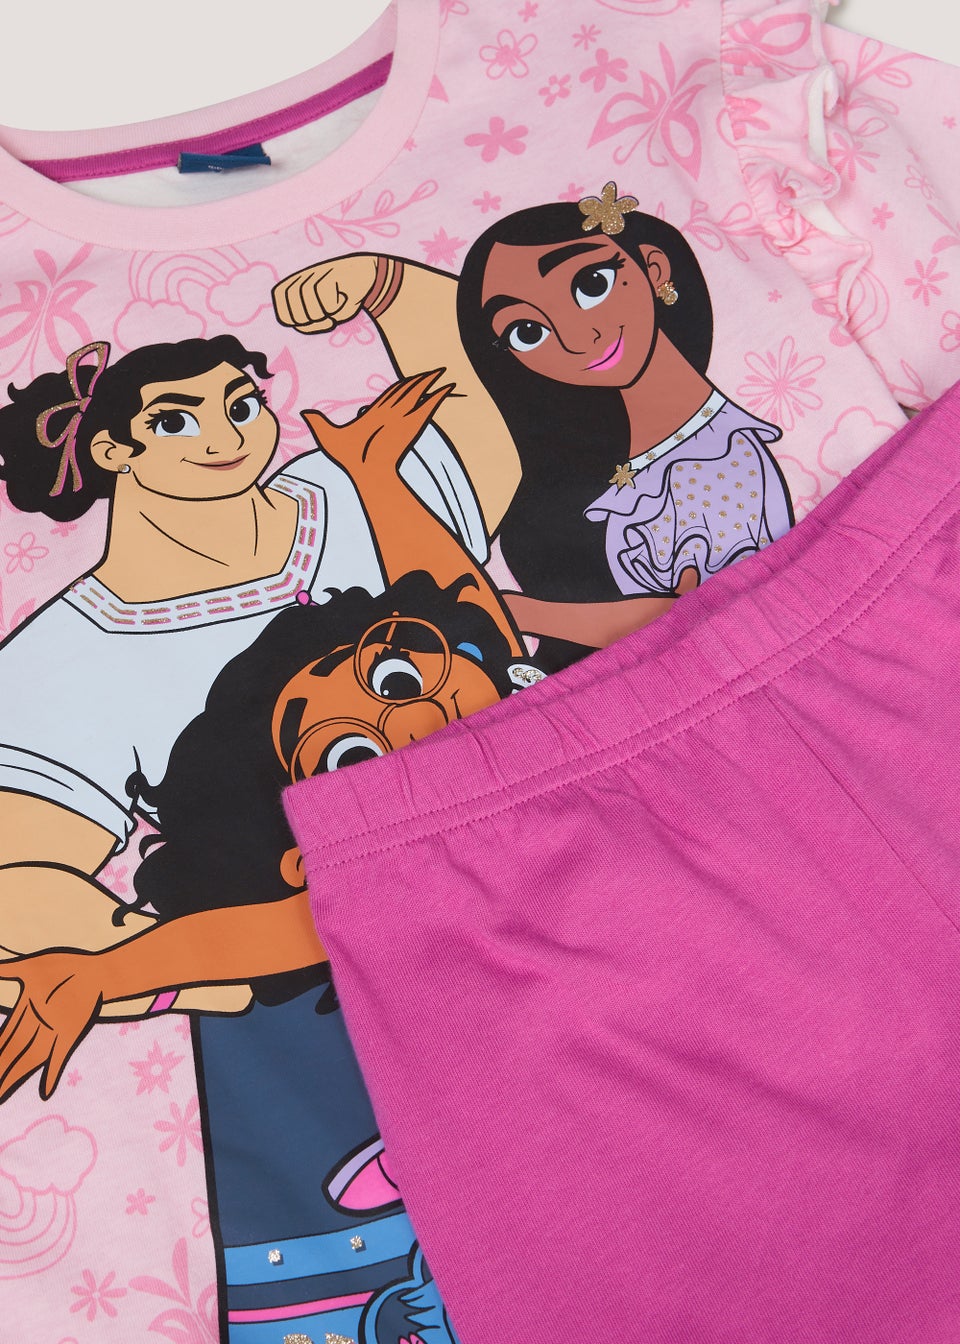 Girls Pink Disney Encanto Pyjama Set (2-9yrs)